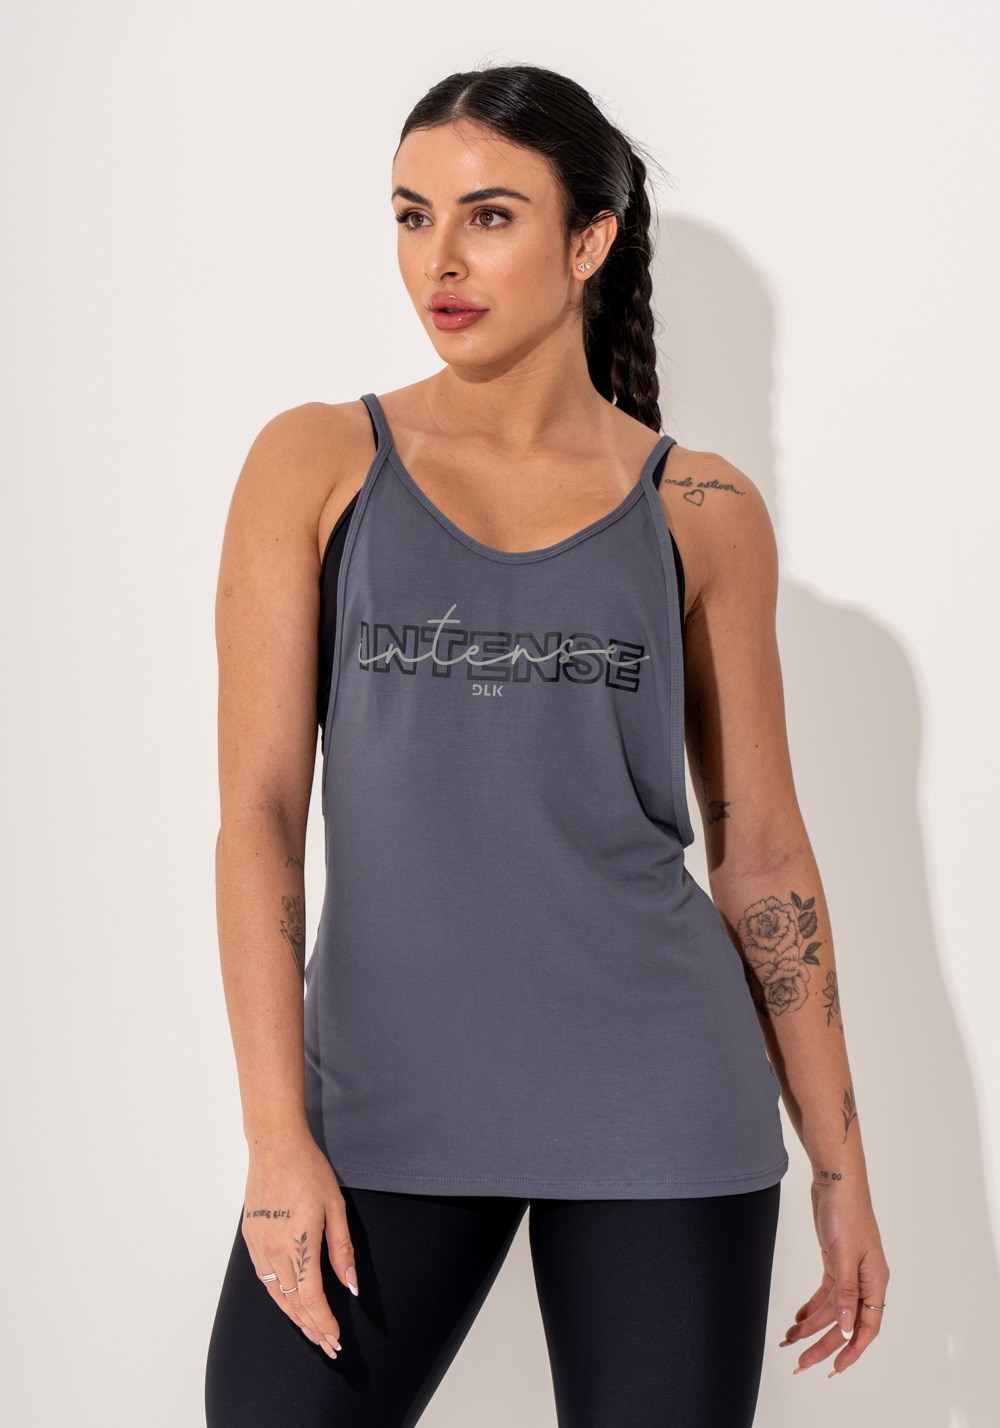 Camiseta fitness feminina viscolycra cinza maxxi cava com silk intense